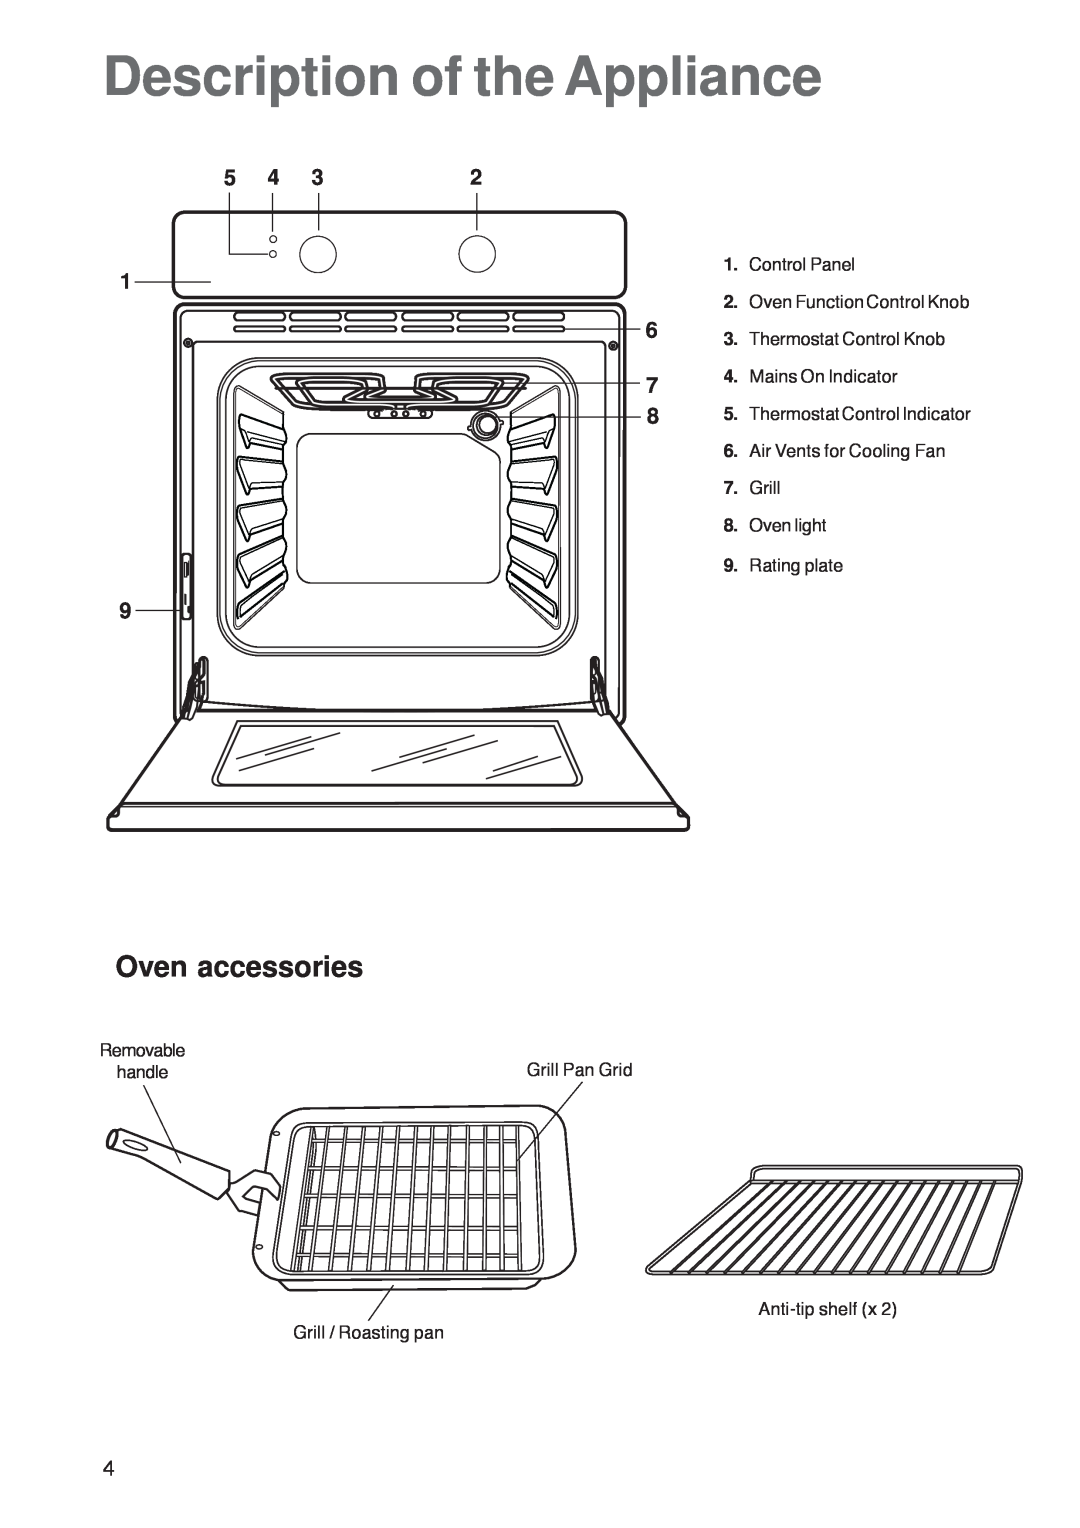 Zanussi ZOB 160 manual Description of the Appliance, Oven accessories, Control Panel, Oven Function Control Knob, Grill 